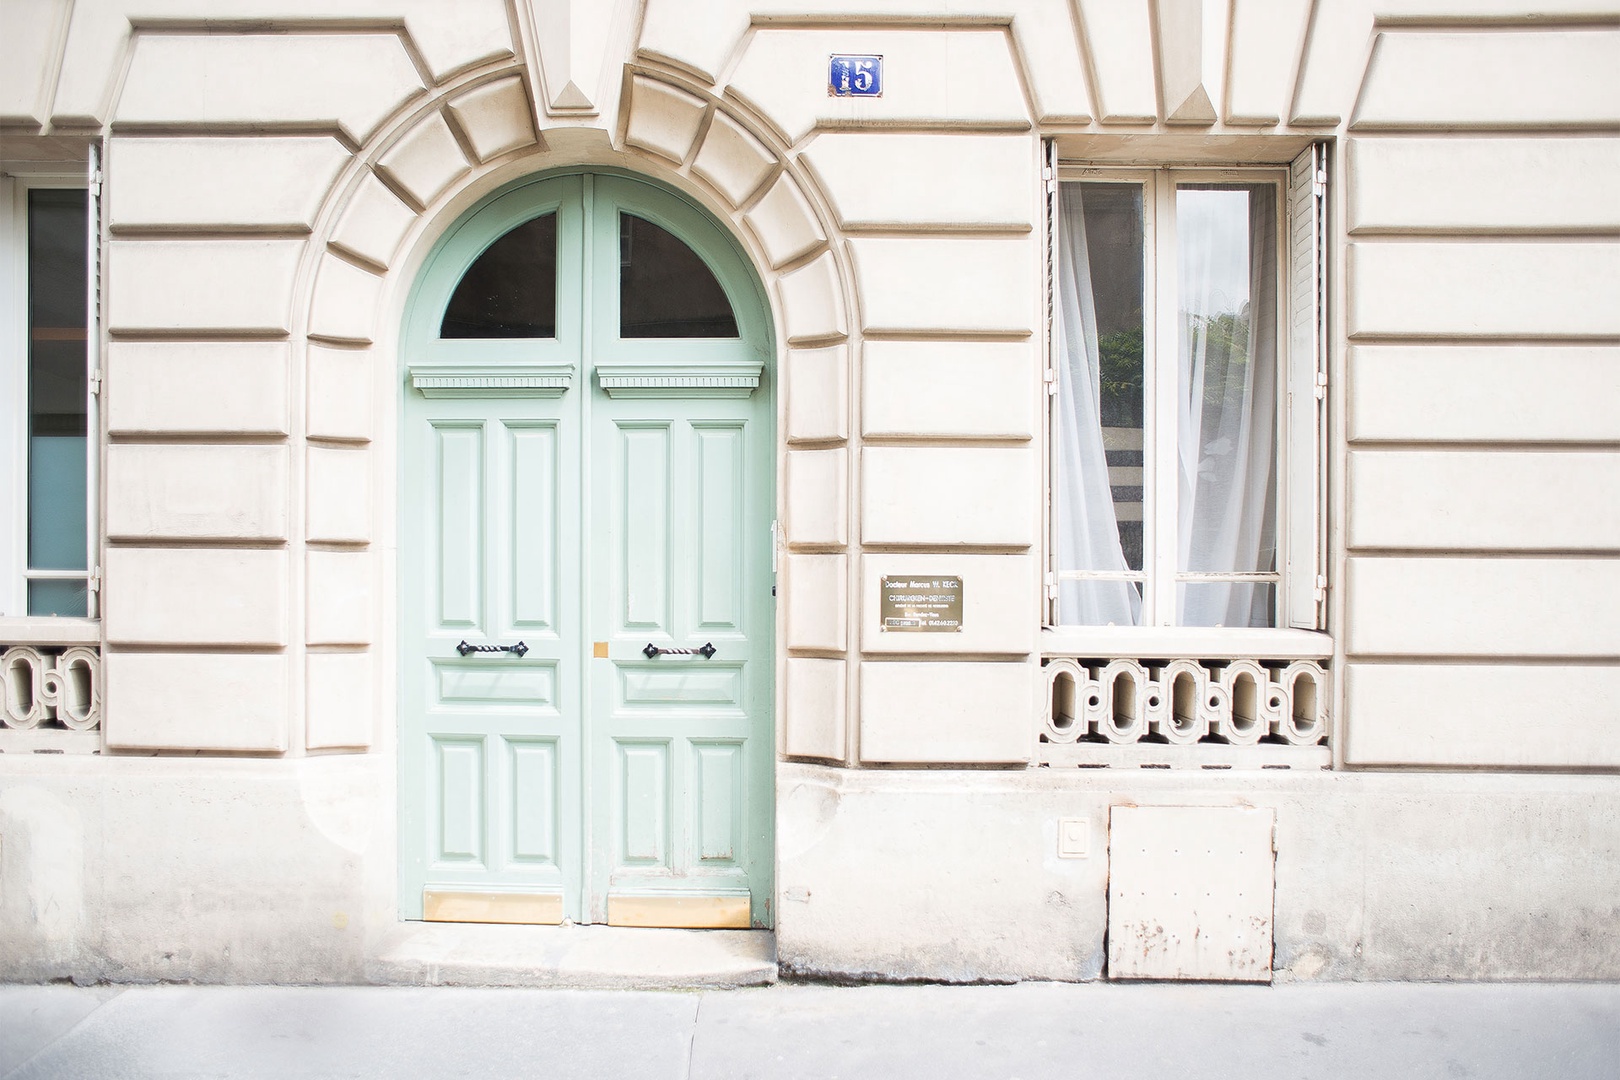 Gorgeous Parisian buildings line every street.